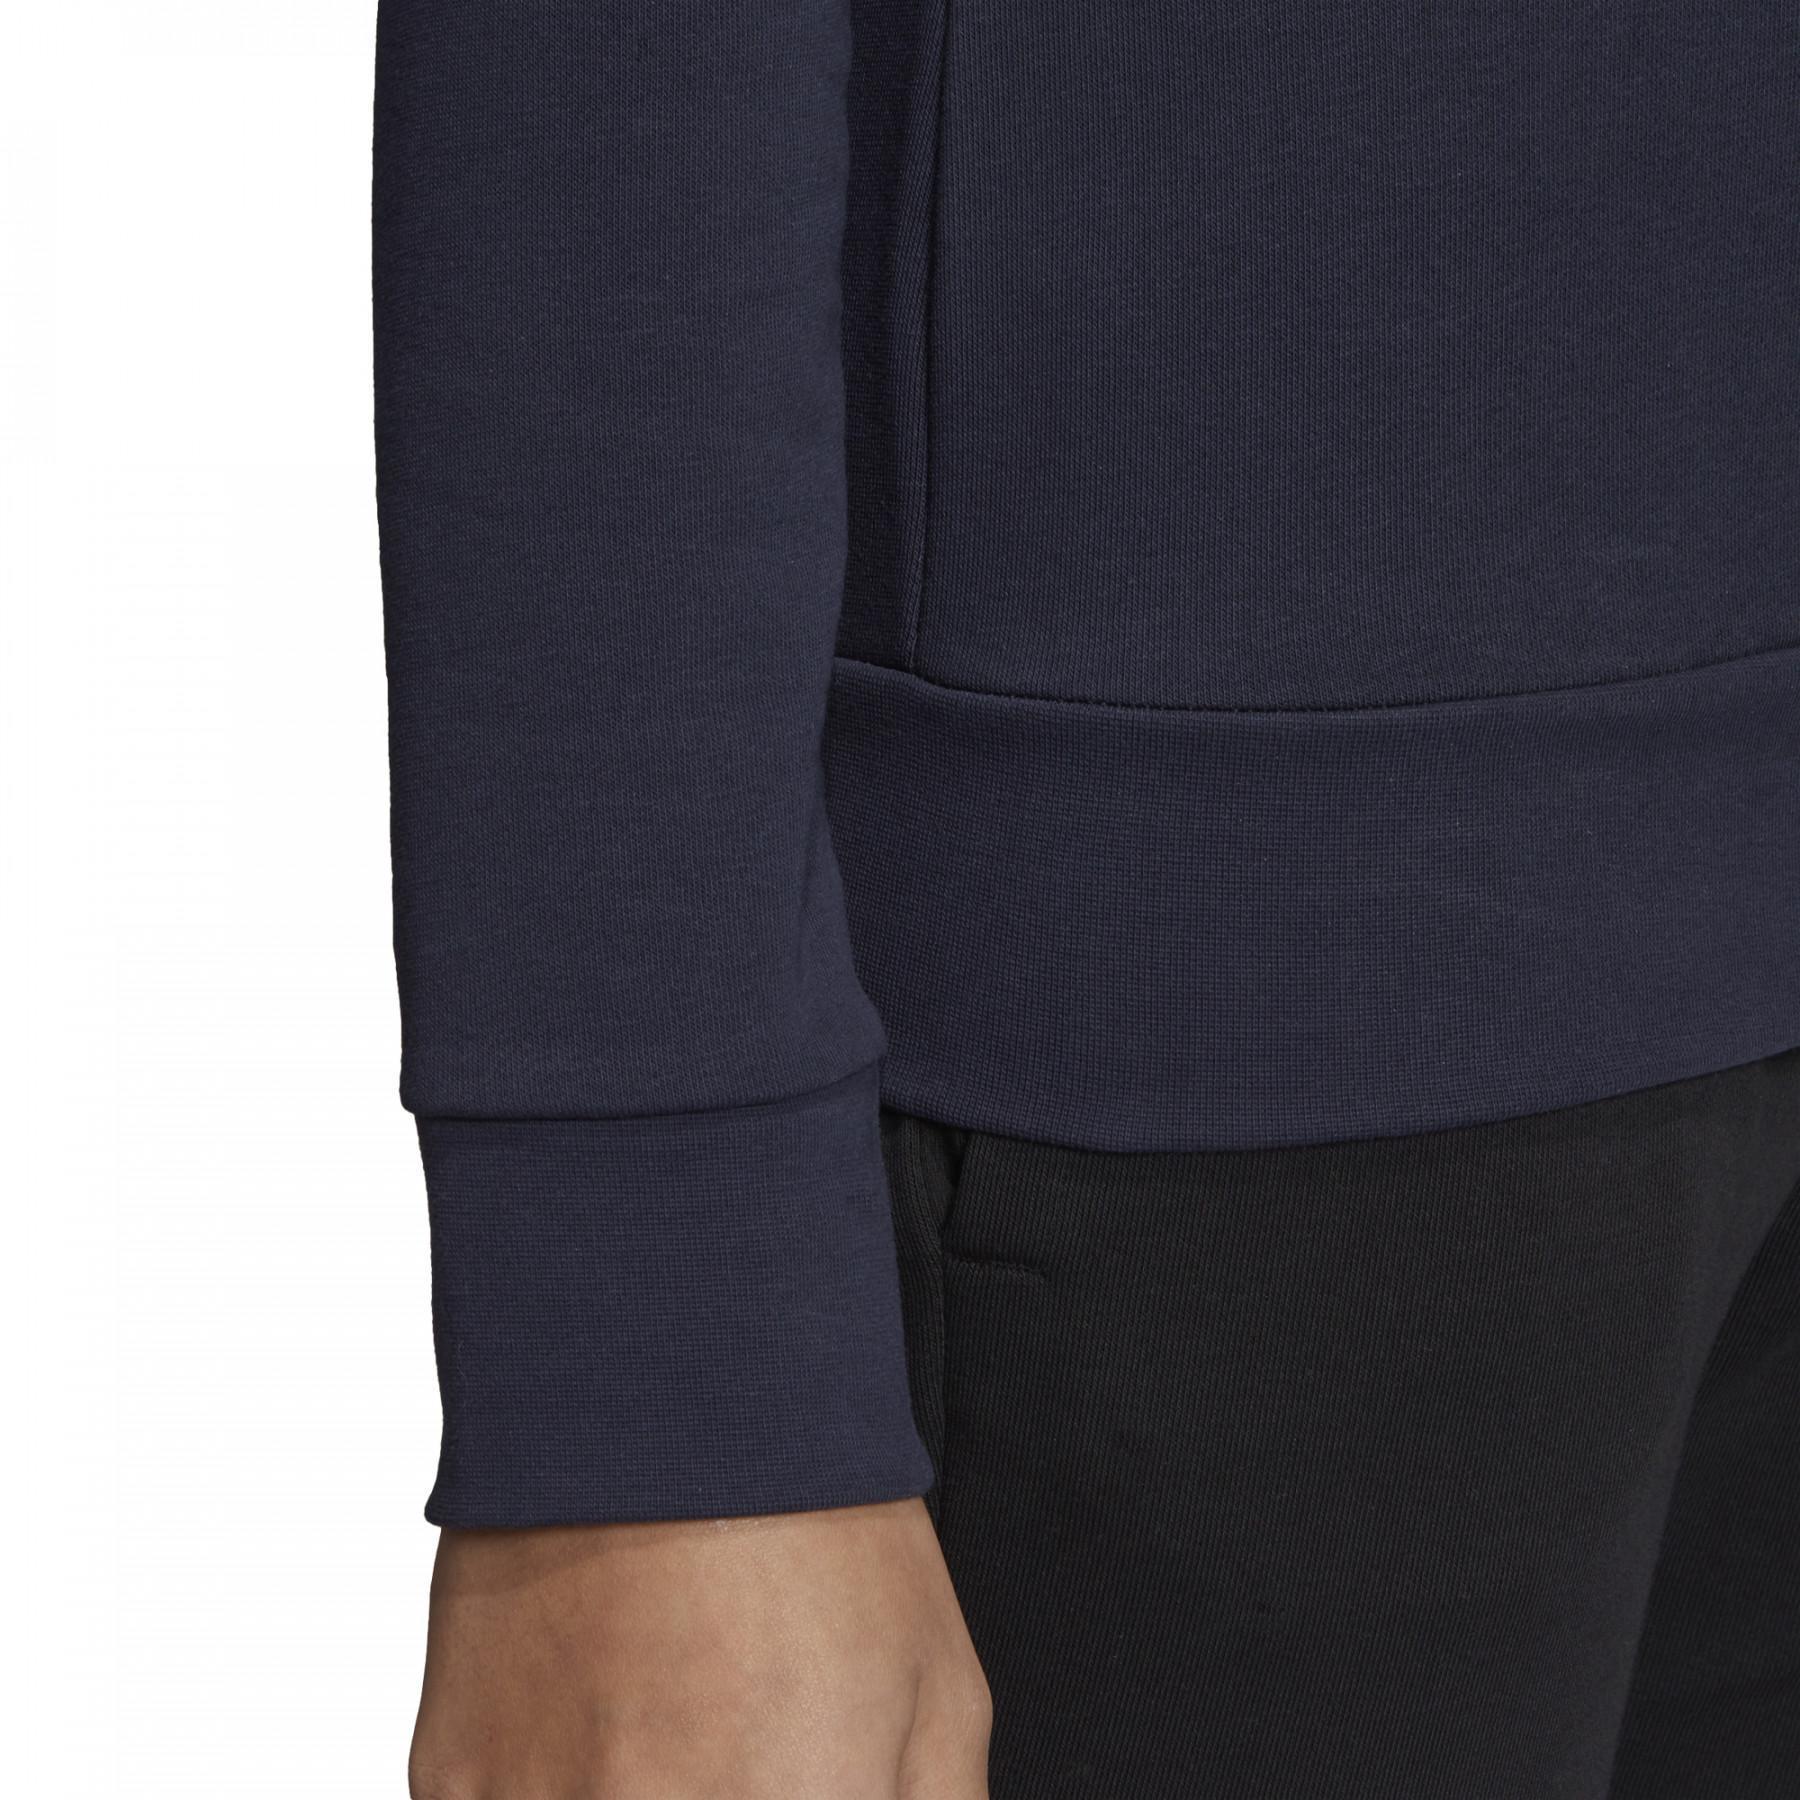 Damen-Sweatshirt adidas Essentials Linear